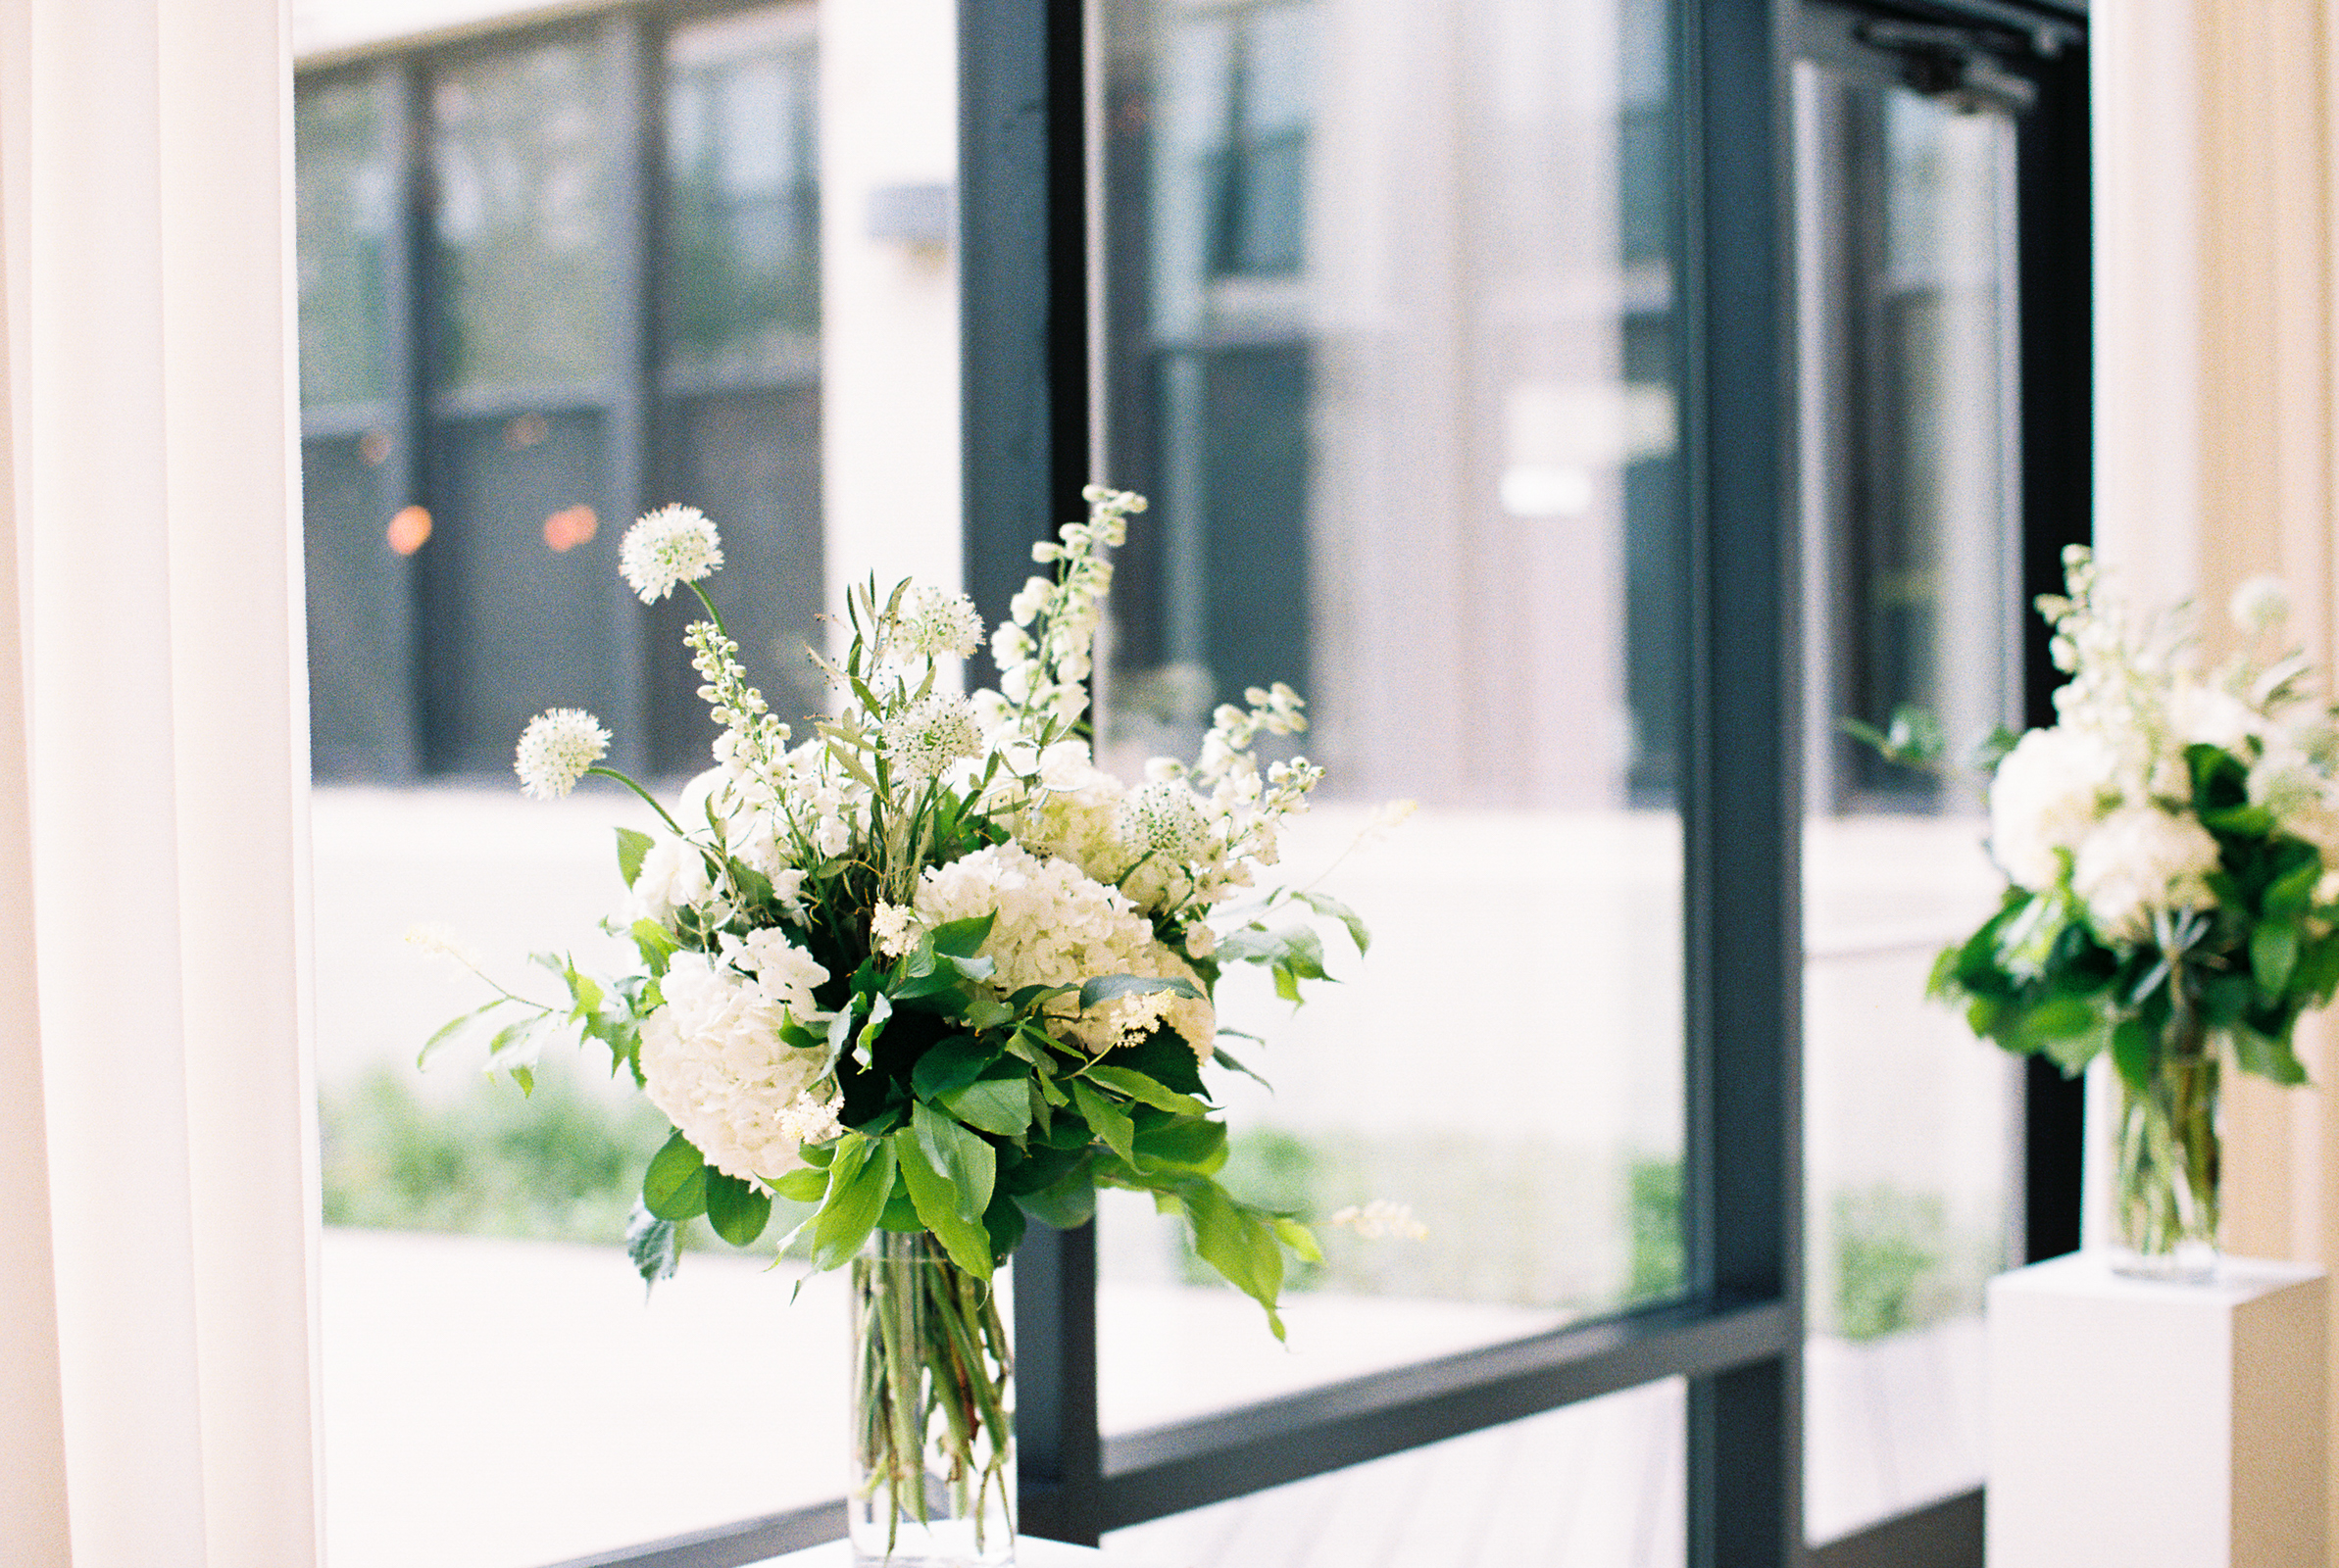 Greenhouse Loft Chicago minimalist and monochromatic wedding with white gardeny altar arrangements of hydrangea.